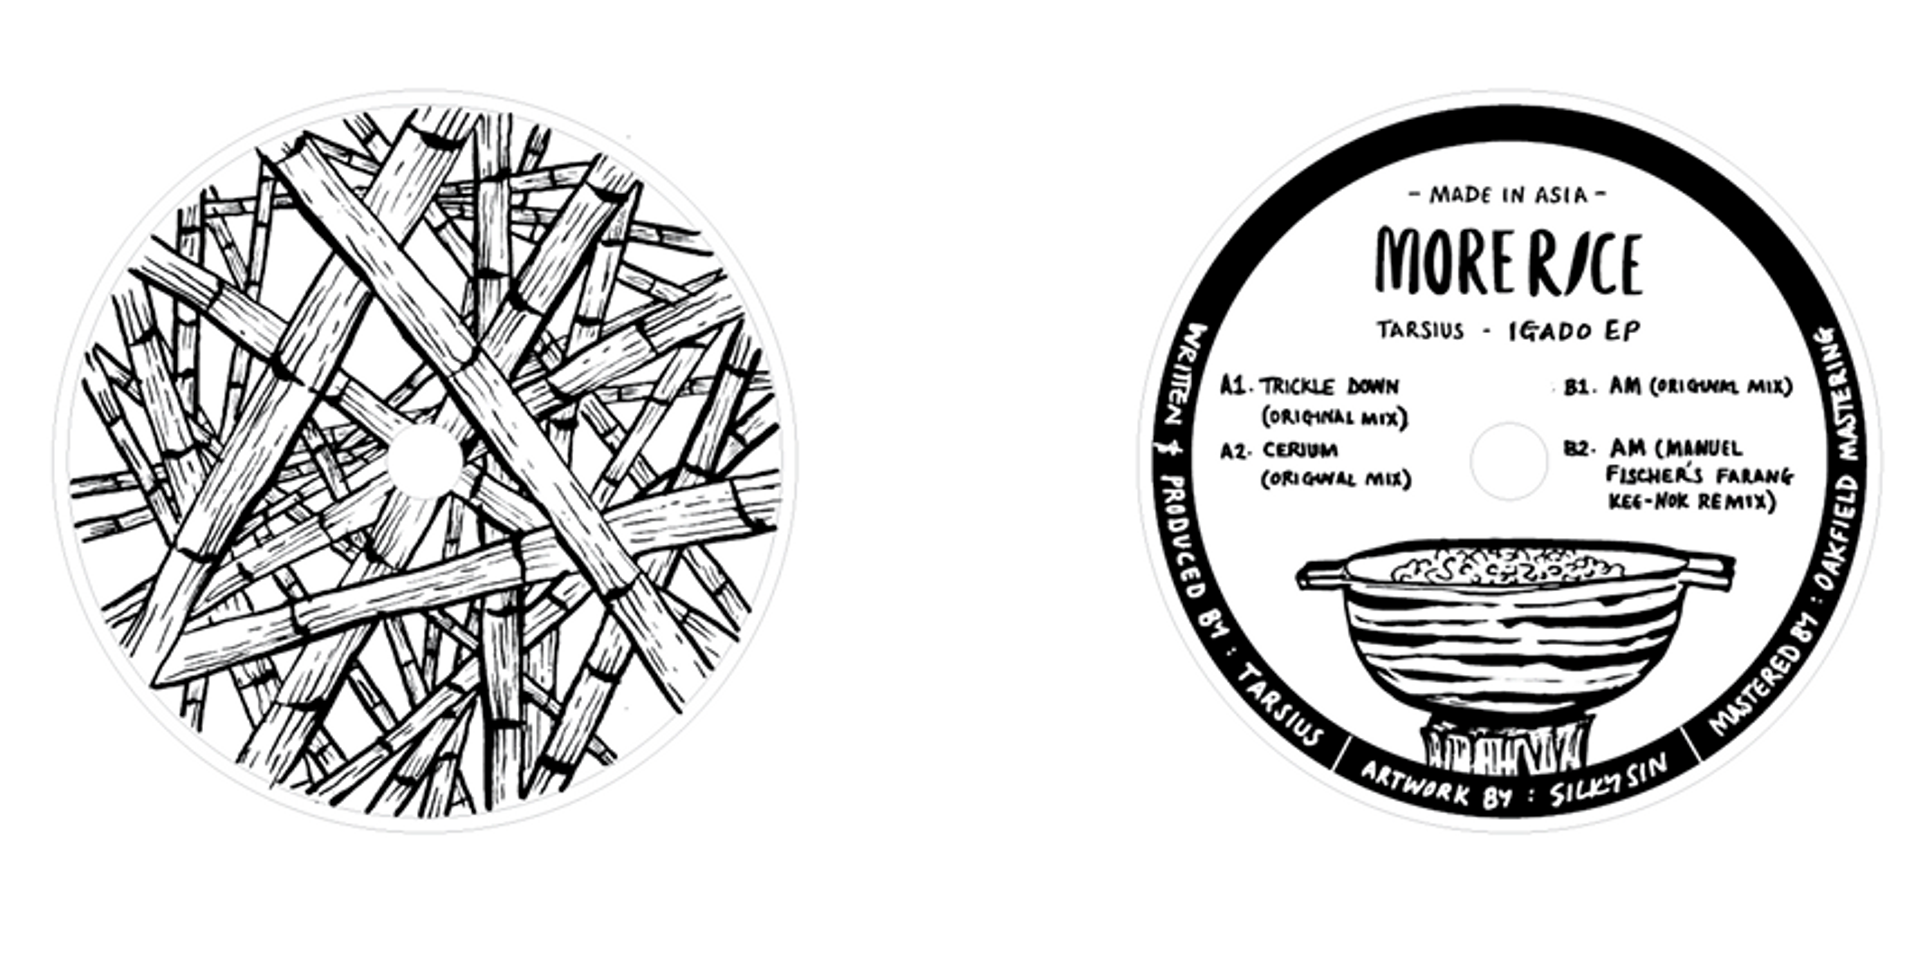 Tarsius release new Igado E.P., via Asia's vinyl-only record label - More Rice